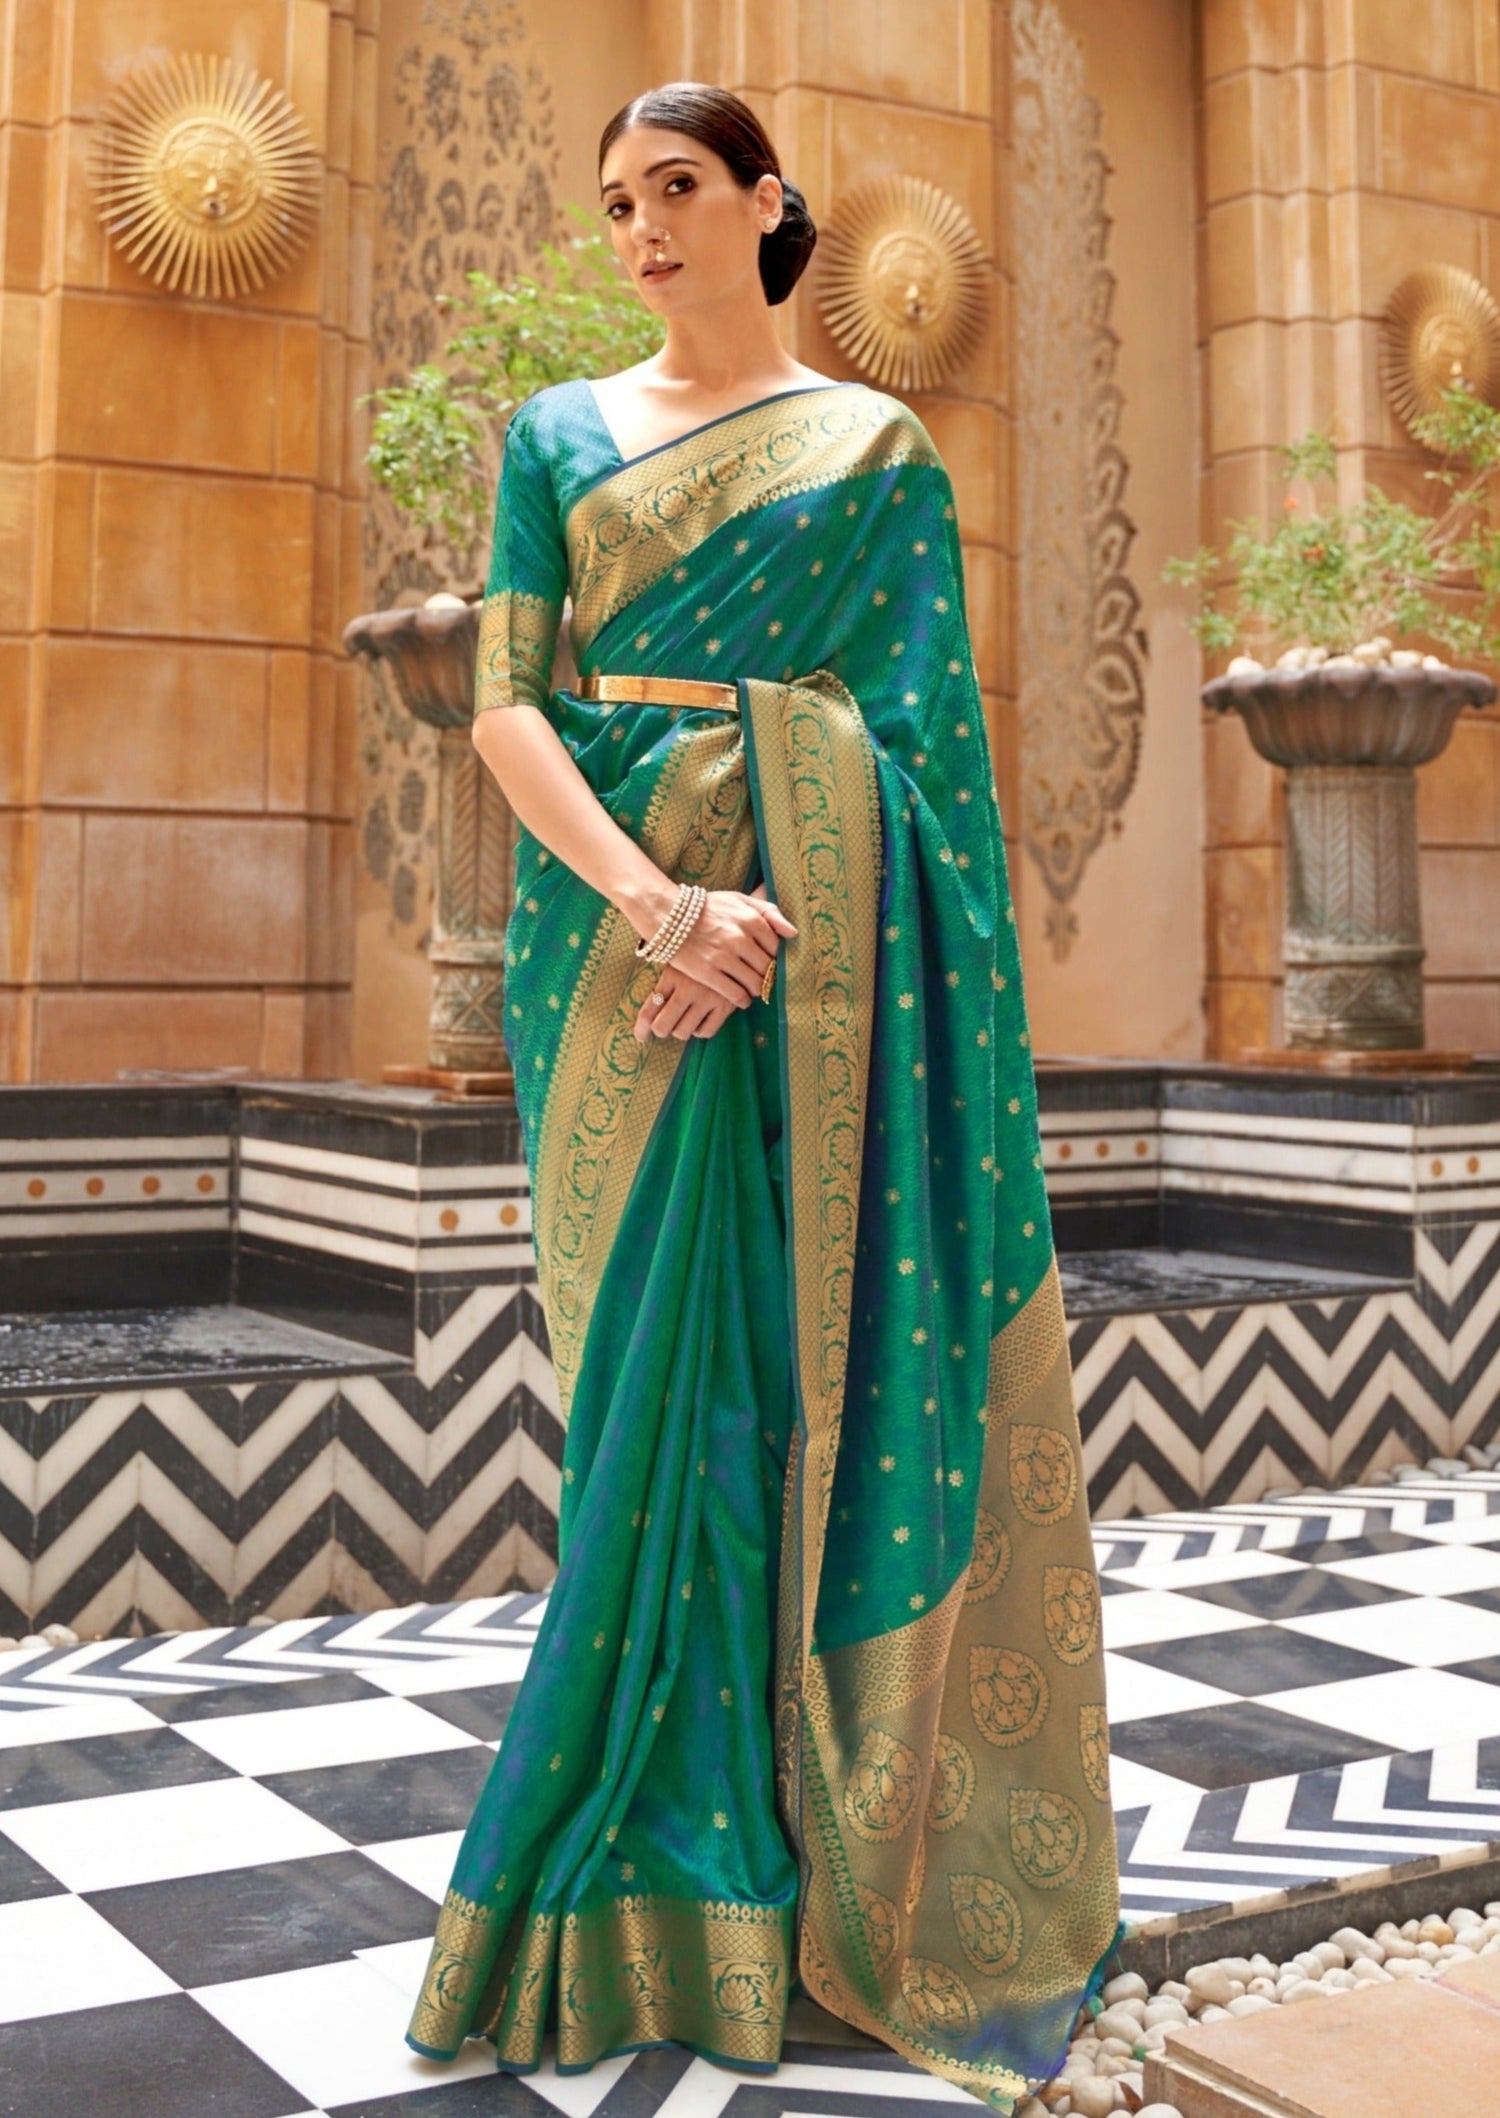 Luxury handloom silk sarees online.